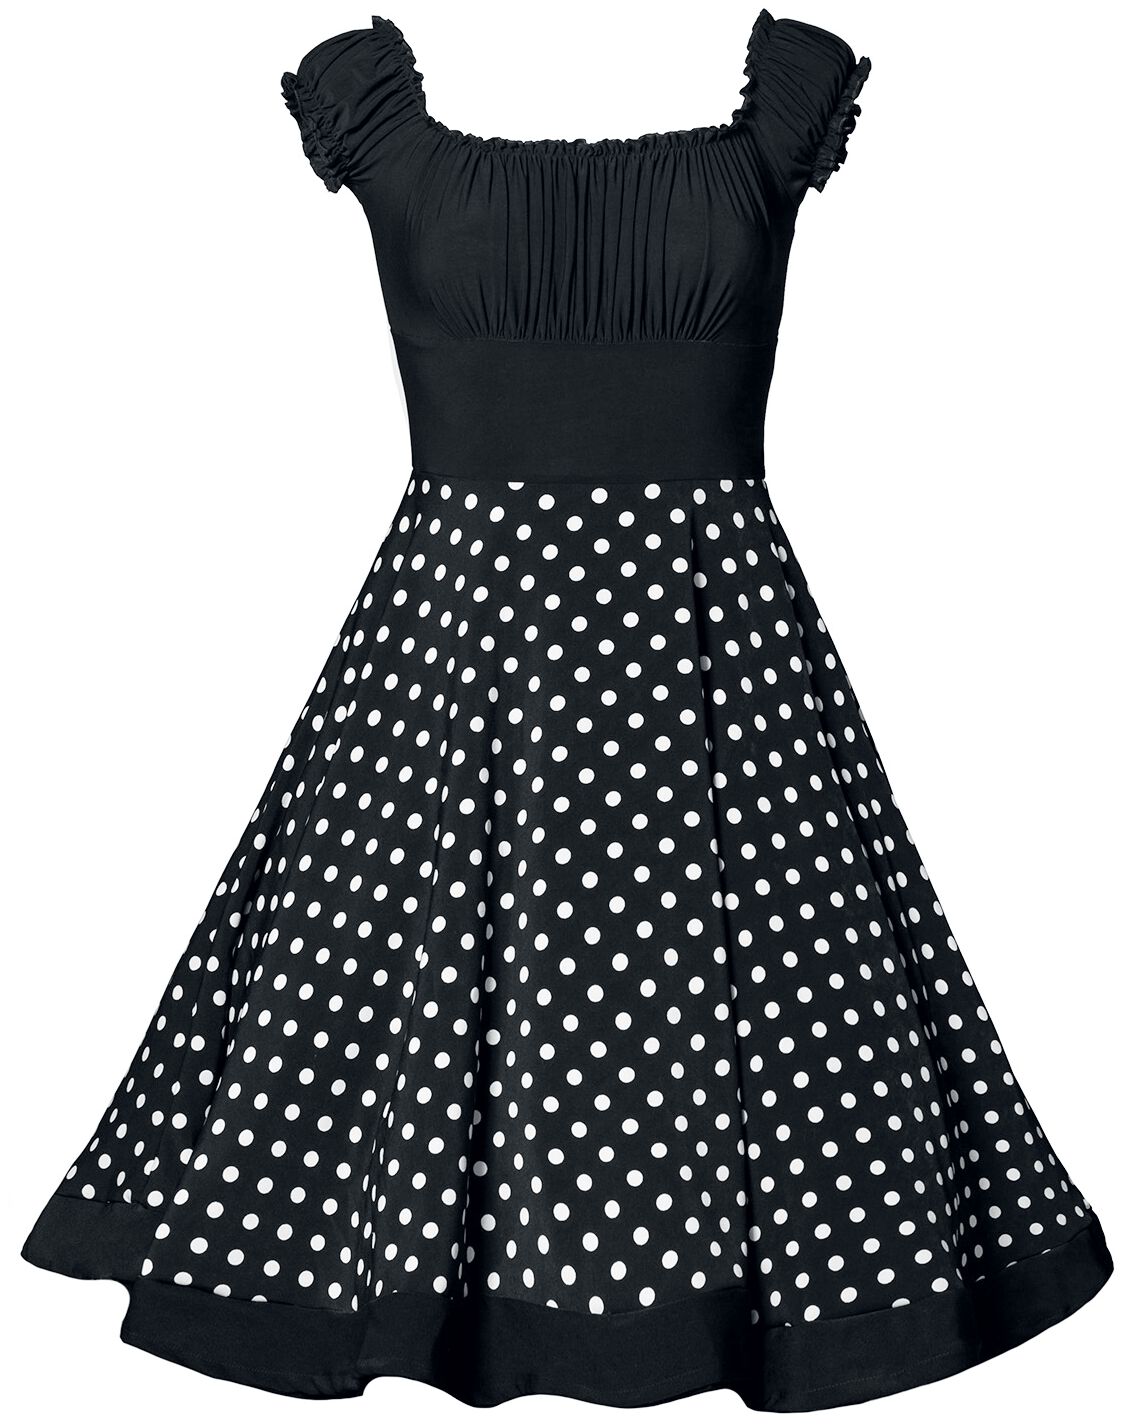 Belsira - Schulterfreies Swing-Kleid - Kleid knielang - schwarz|weiß